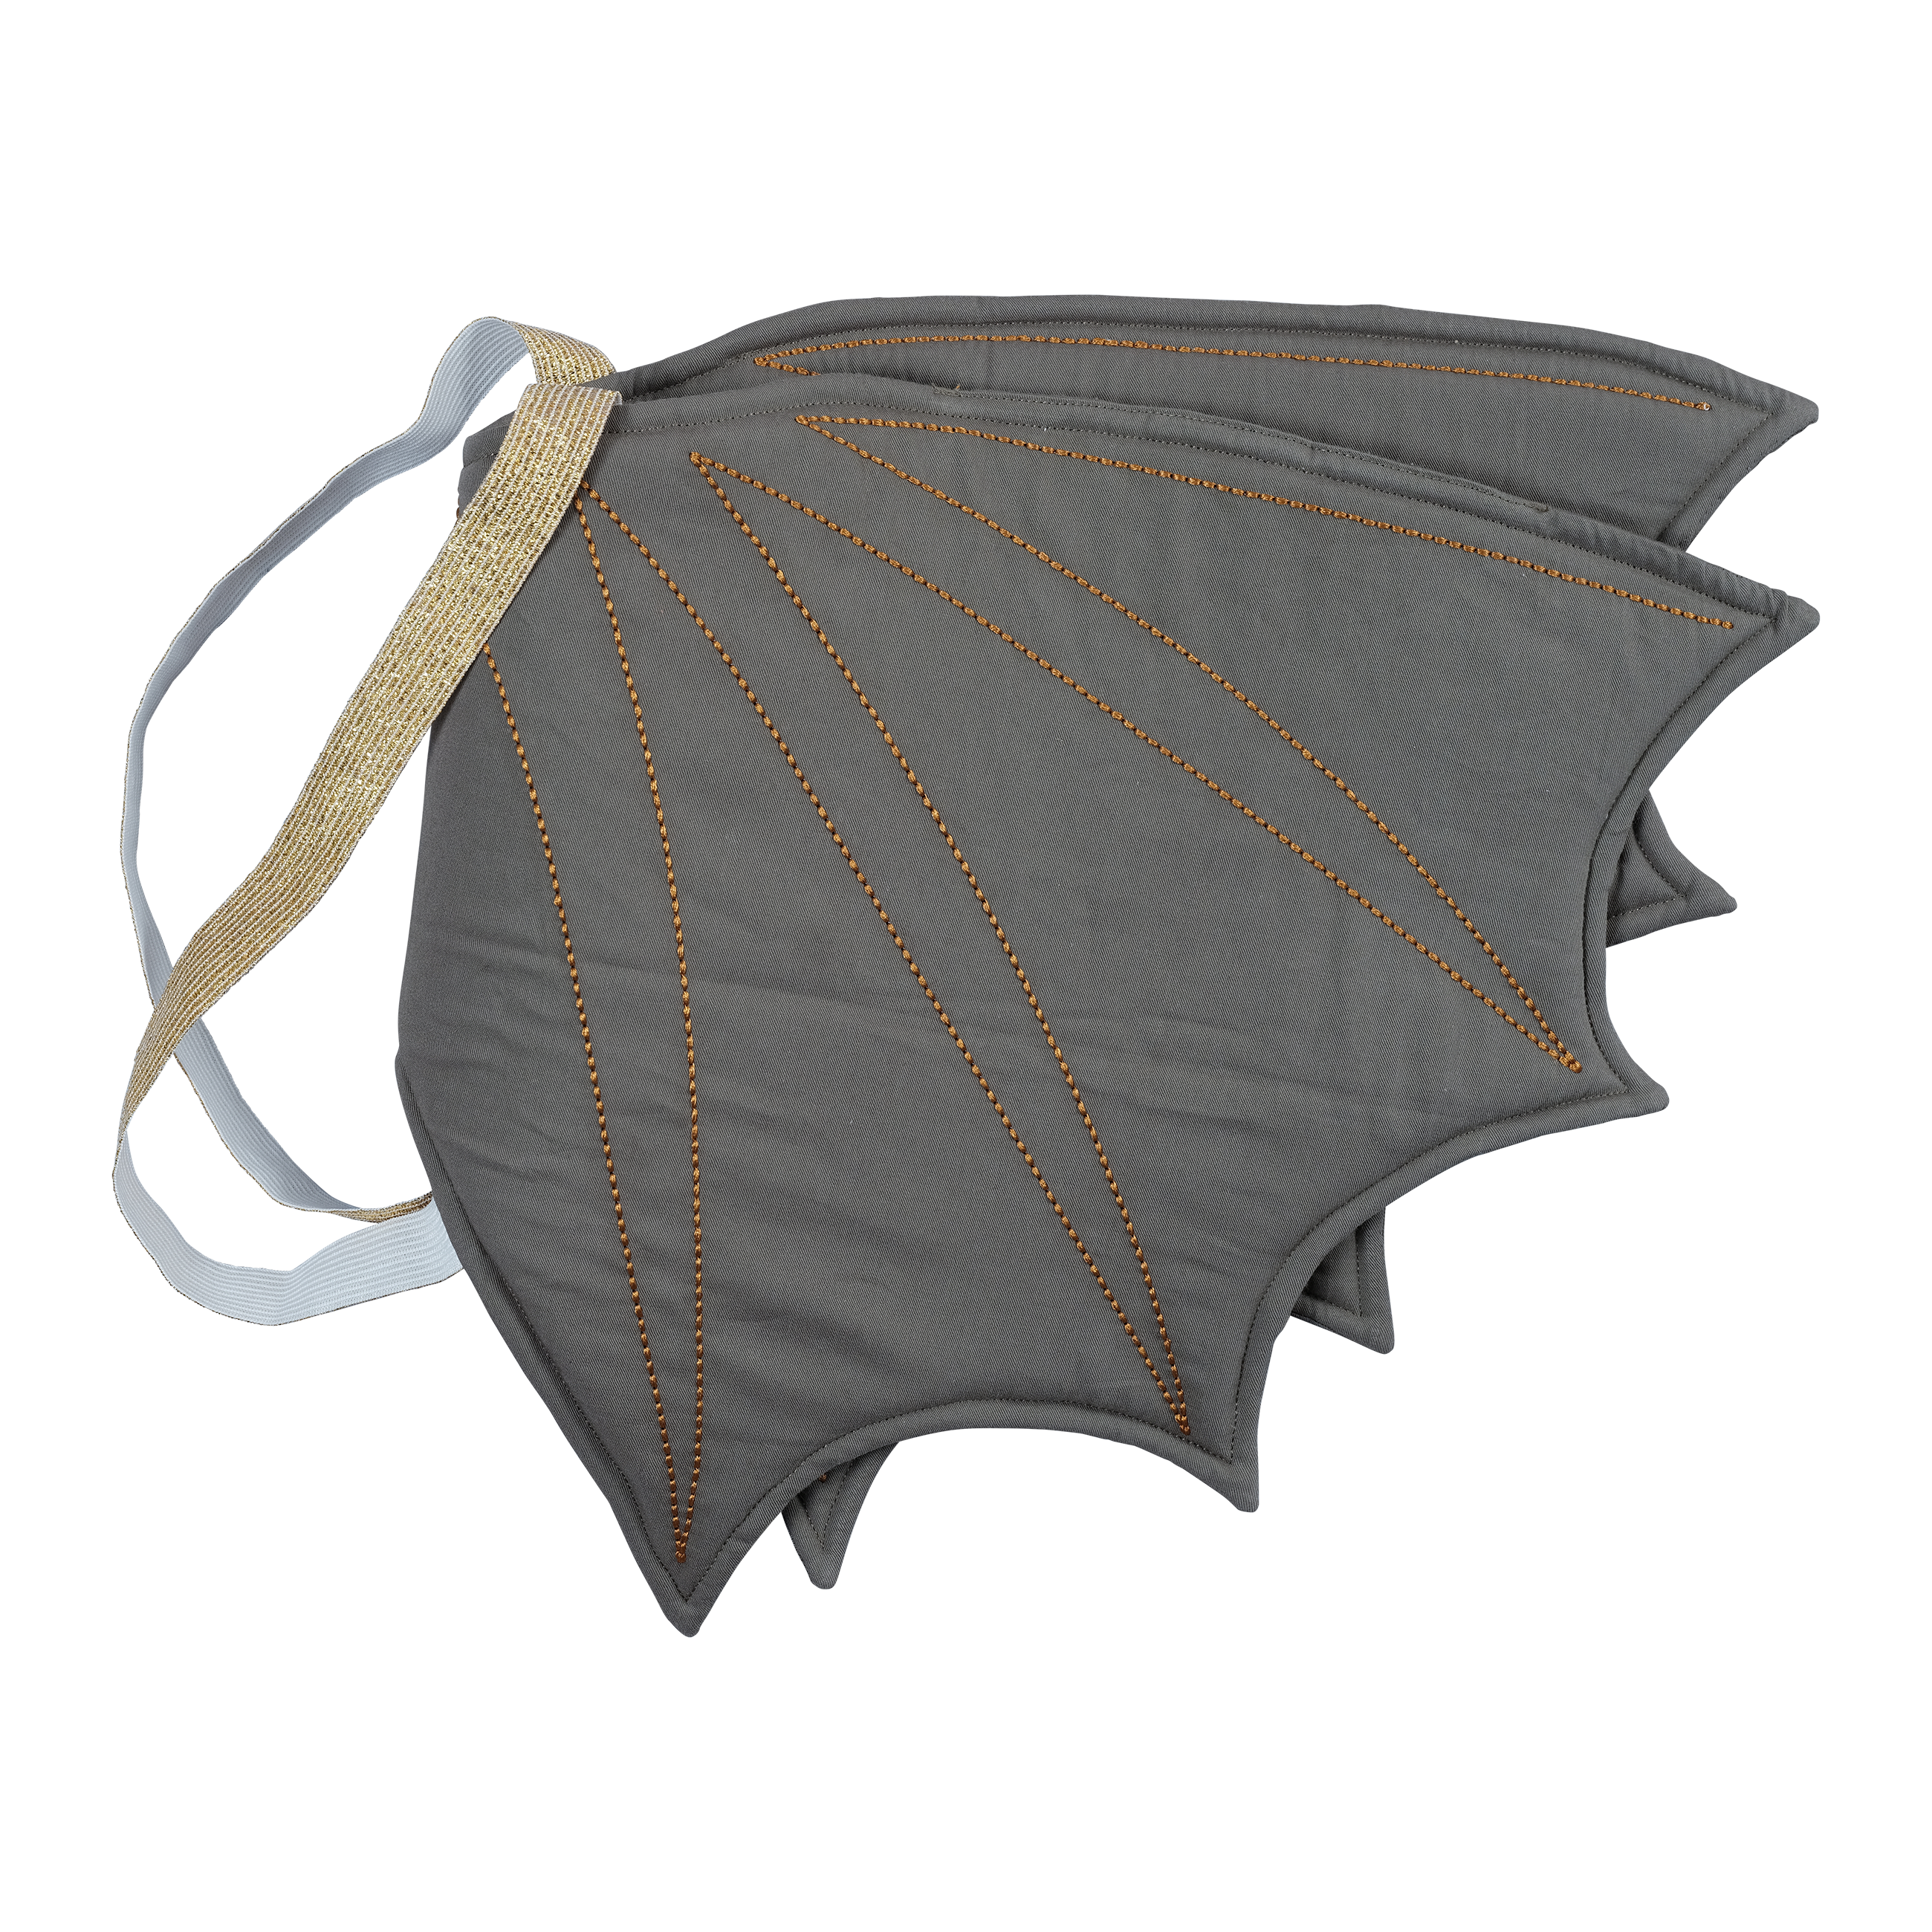 Drachen Flügel Fabelab - Biobaumwolle Kostüm